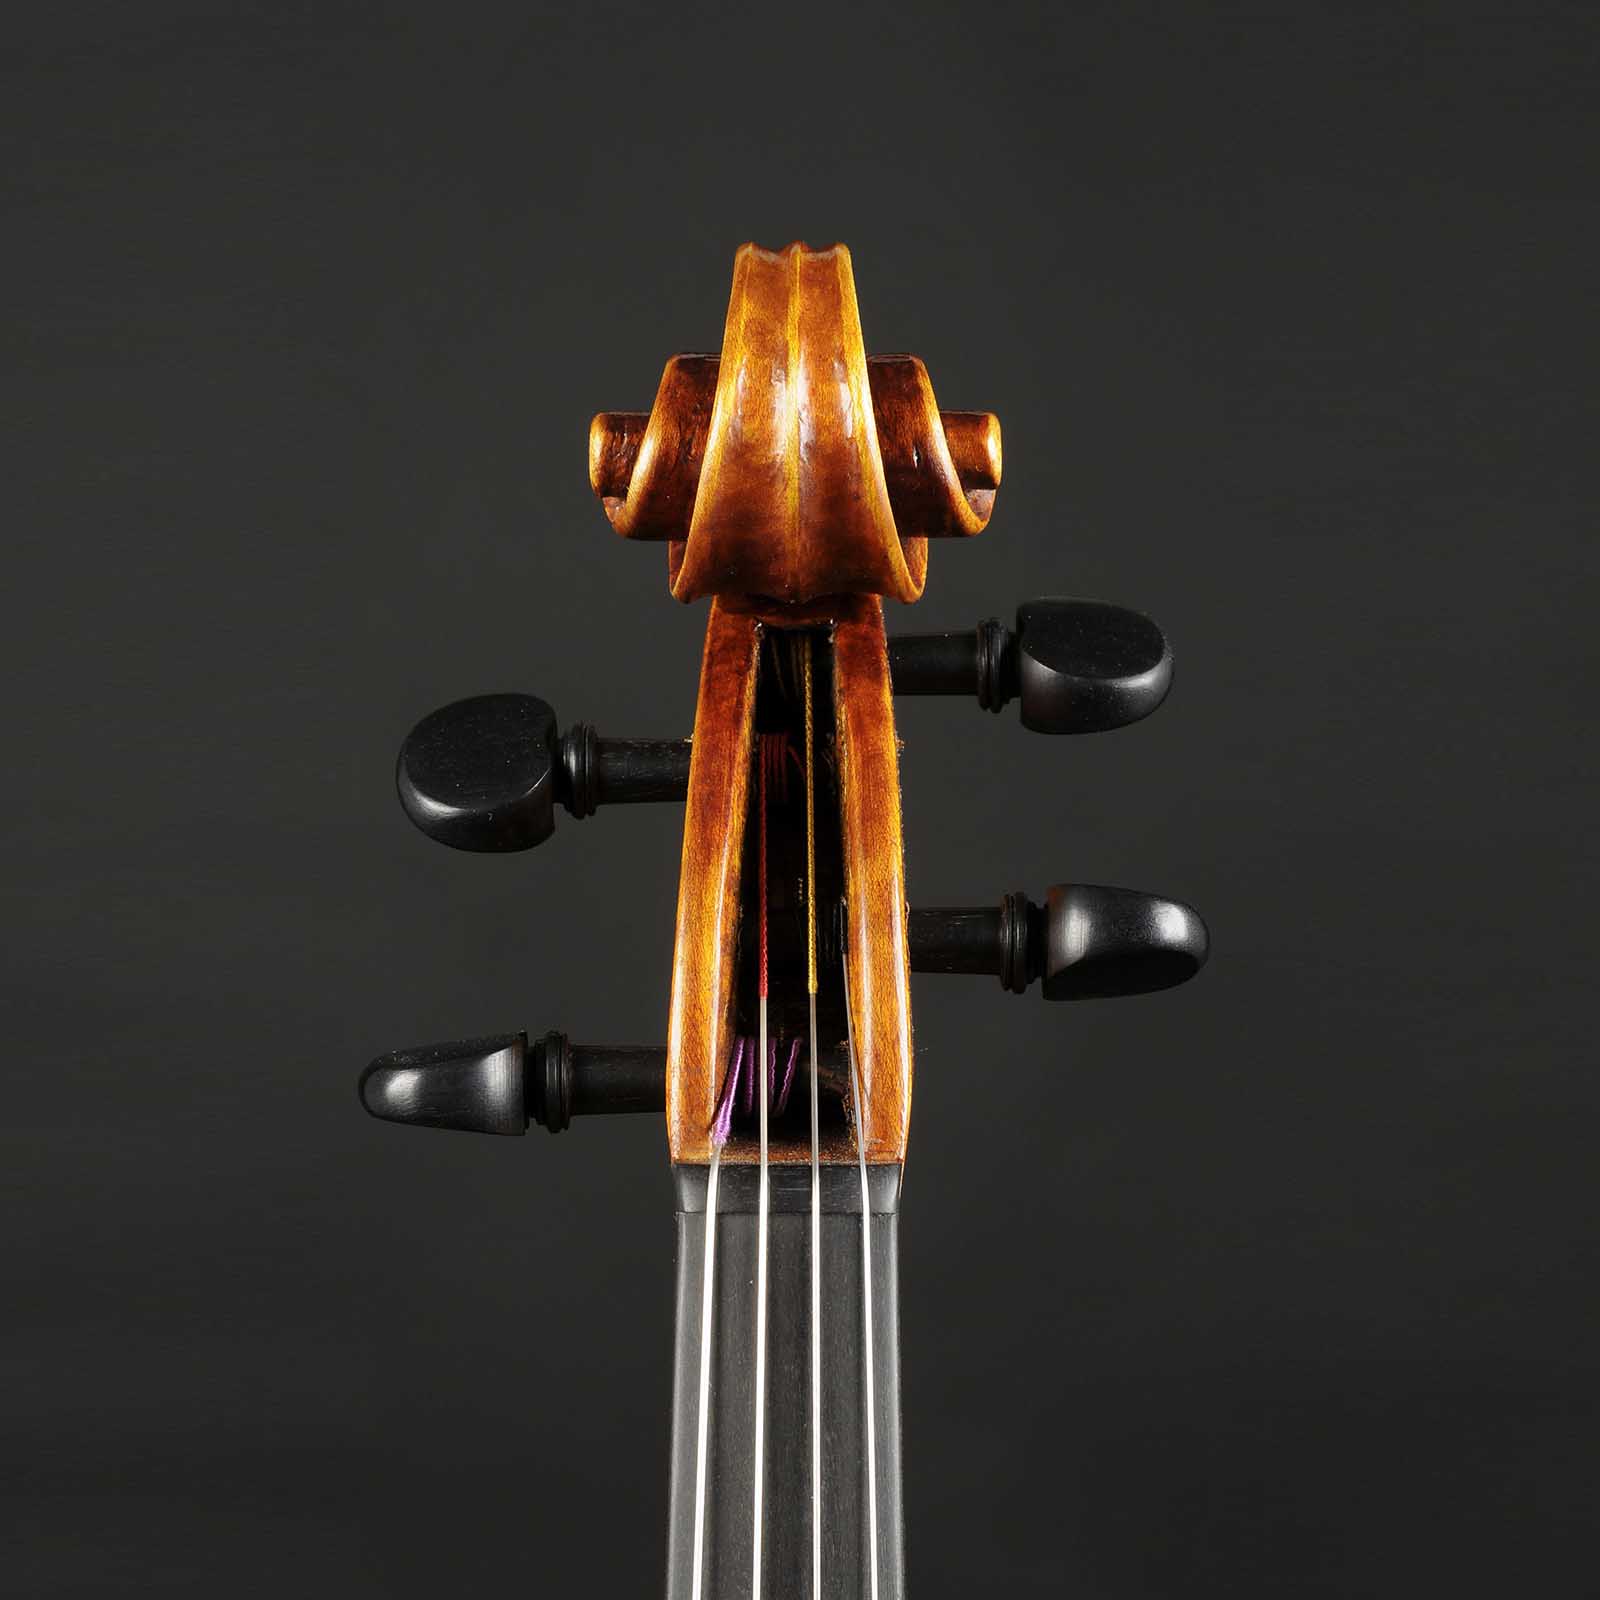 Antonio Stradivari Cremona 1672 “Gustav“ cm 42 - Image 8